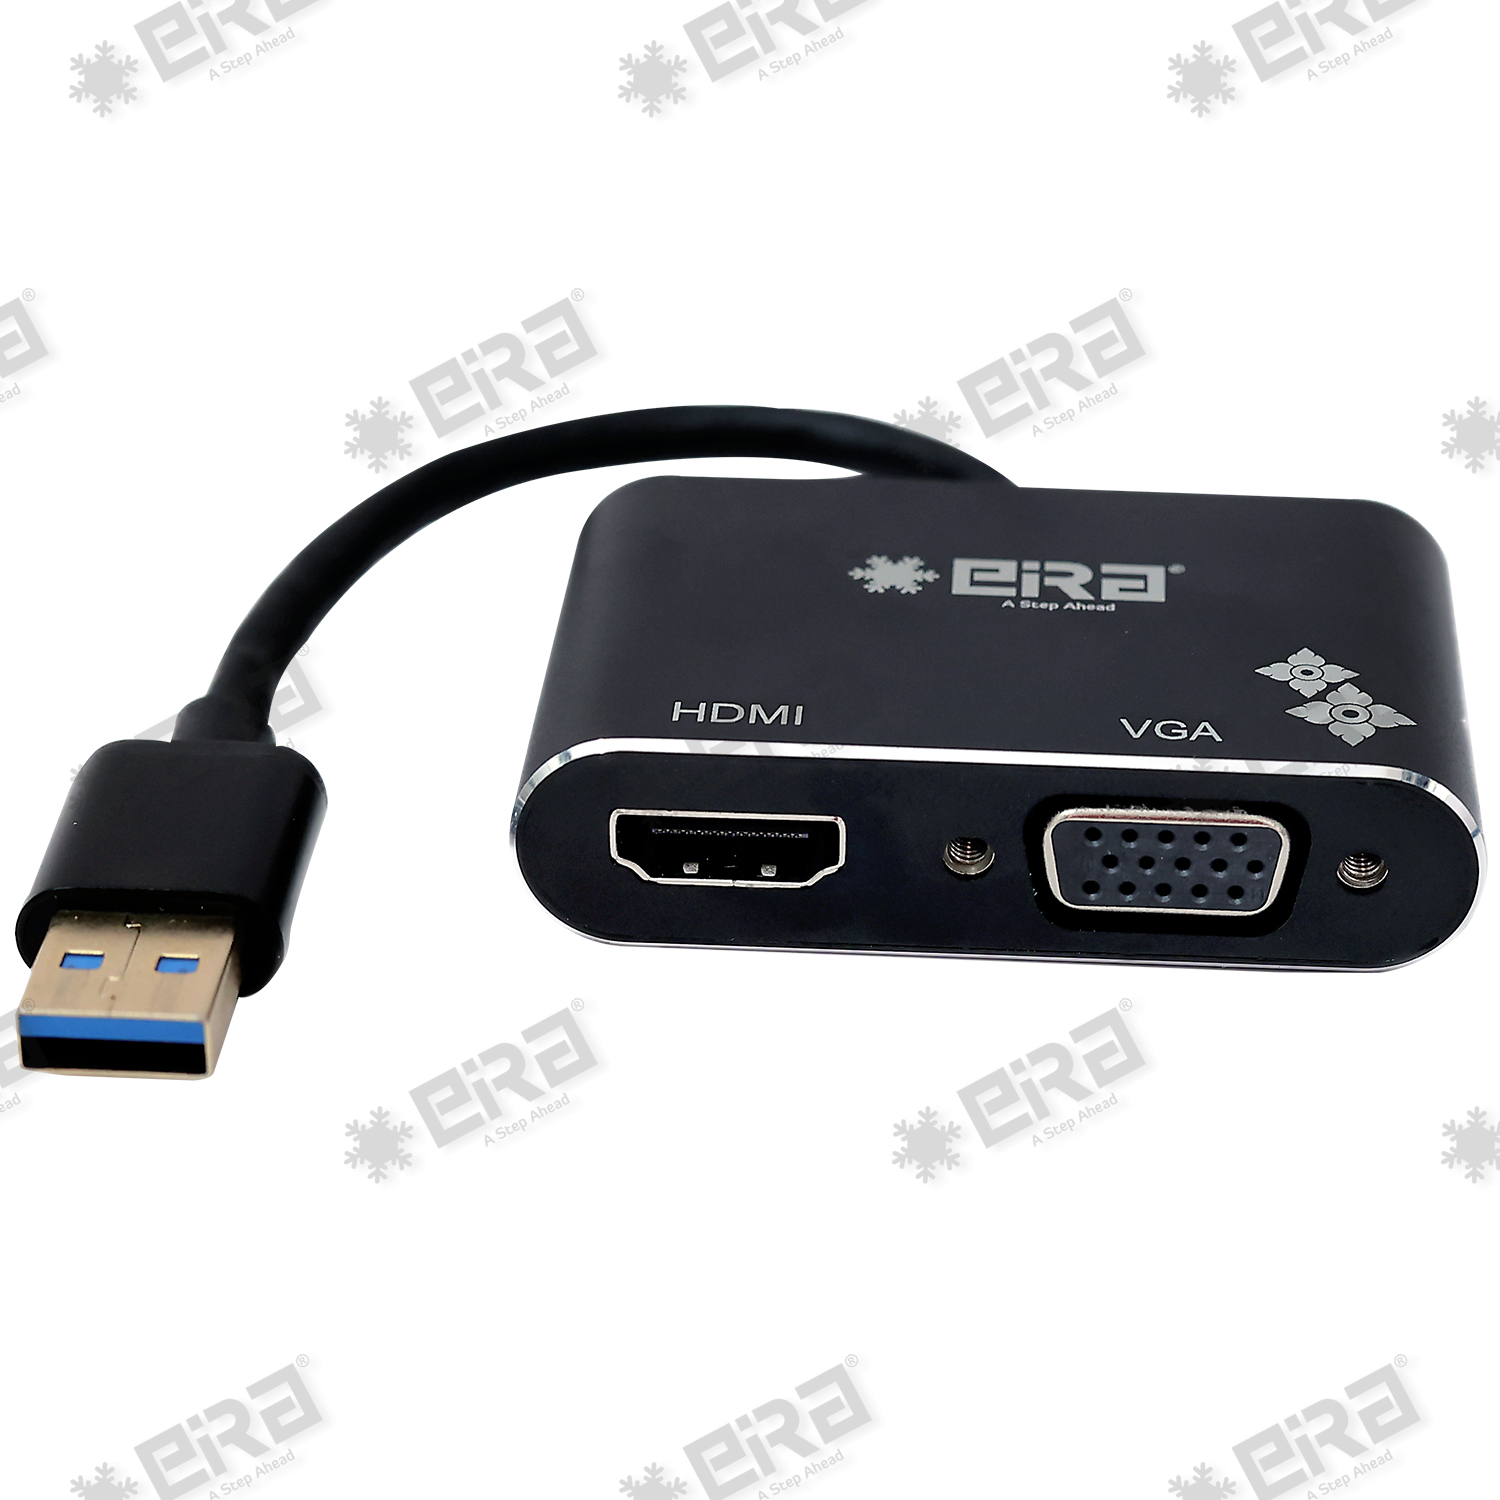 Buy ARMART USB to VGA adapter, USB 3.0 to HDMI Converter 1080P